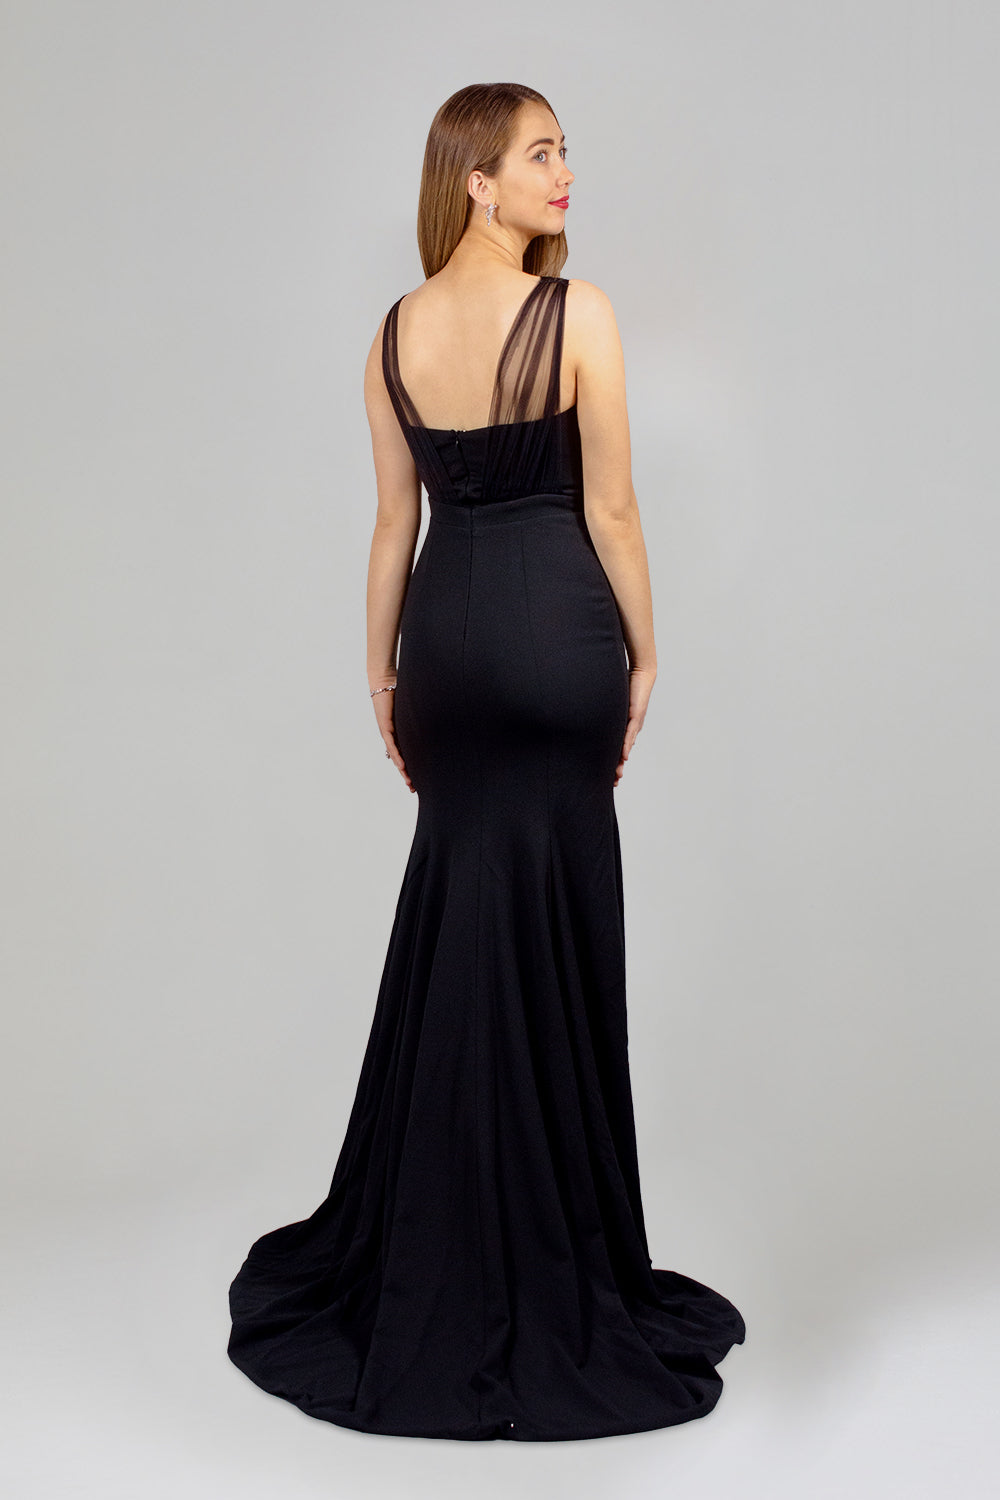 custom made black bridesmaid dresses melbourne perth australia envious bridal & formal